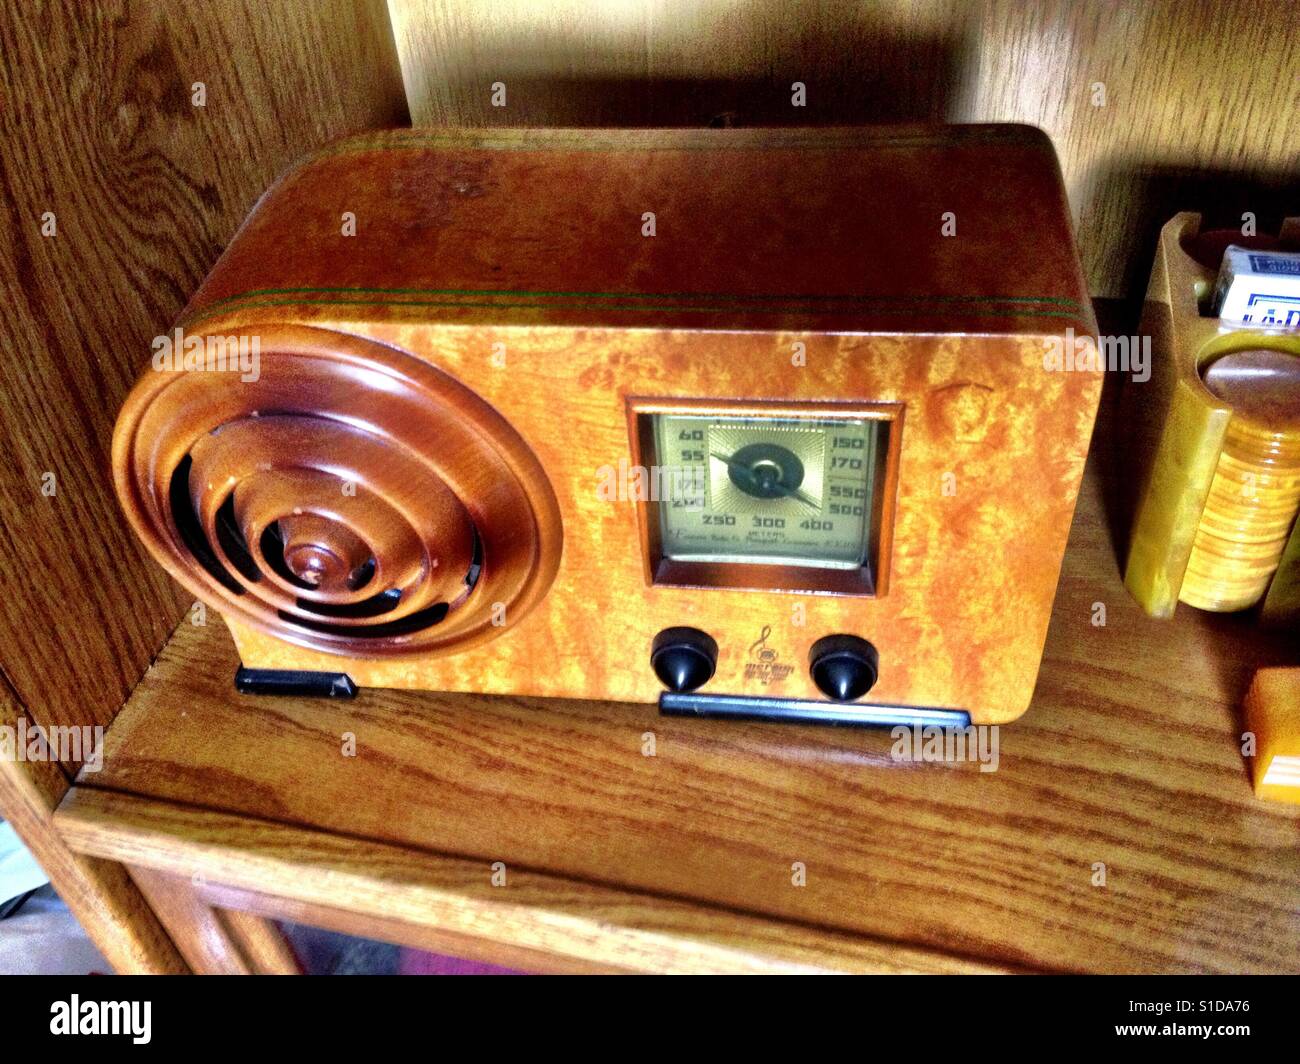 Rare Art Deco radio Stock Photo - Alamy